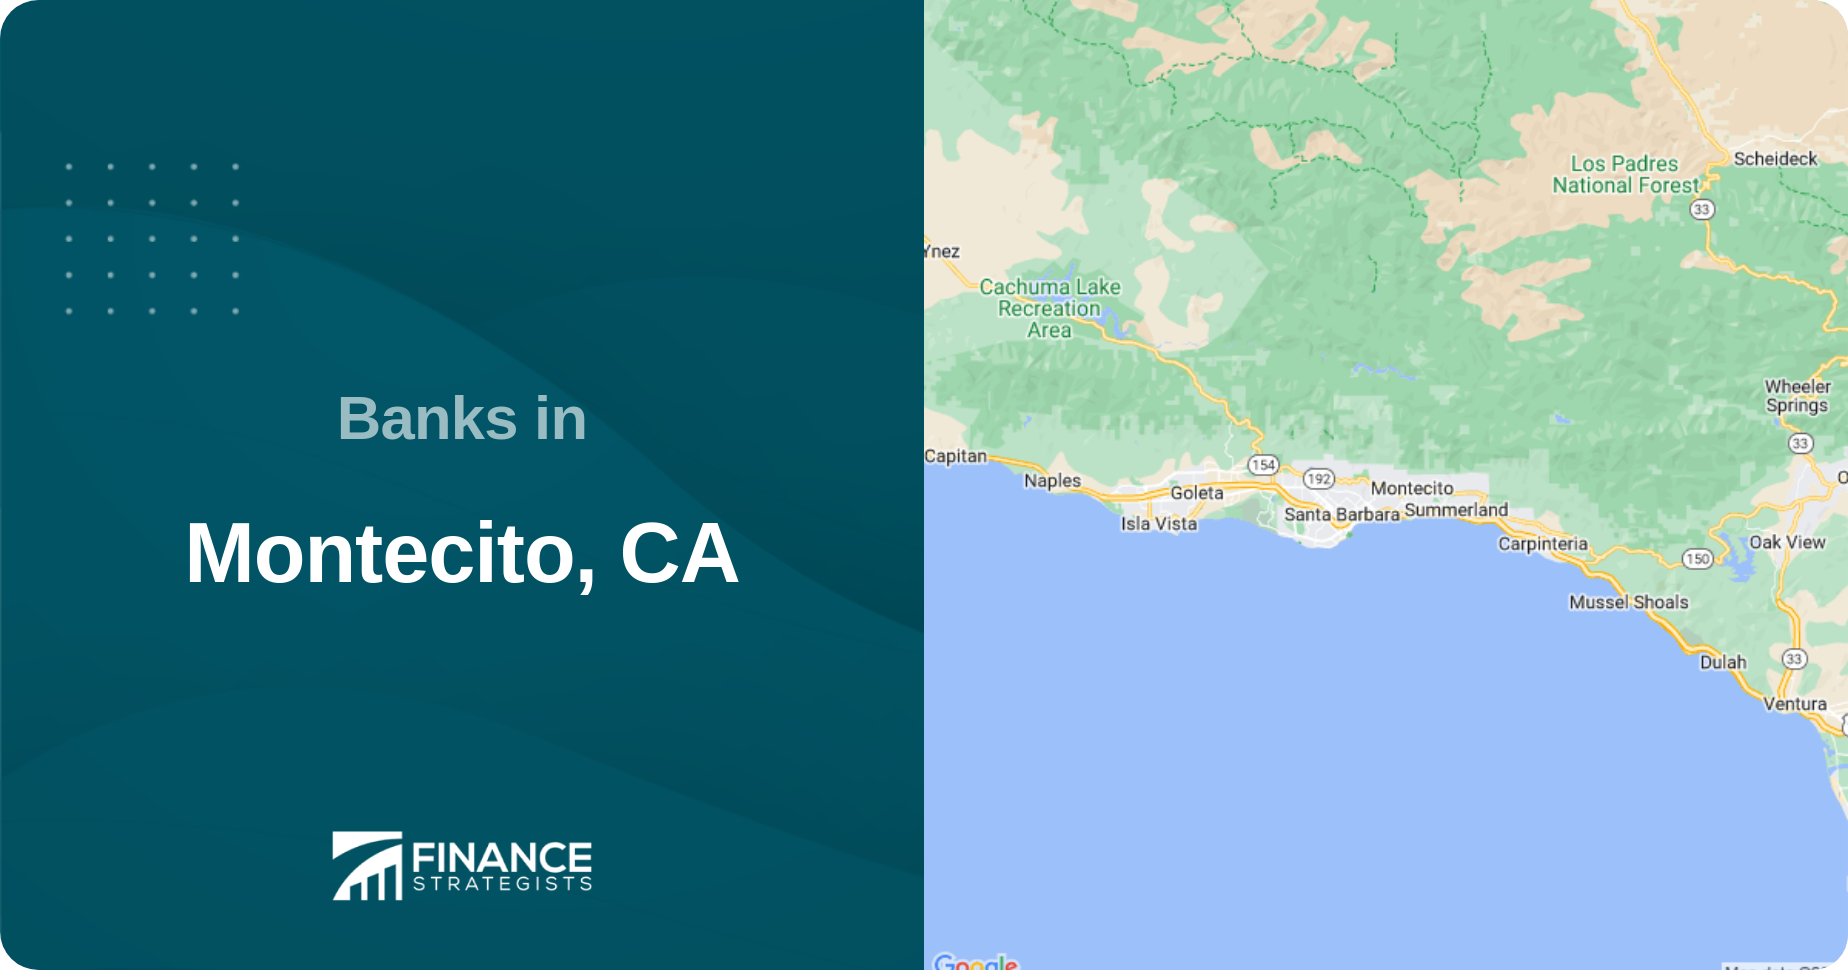 Banks in Montecito, CA